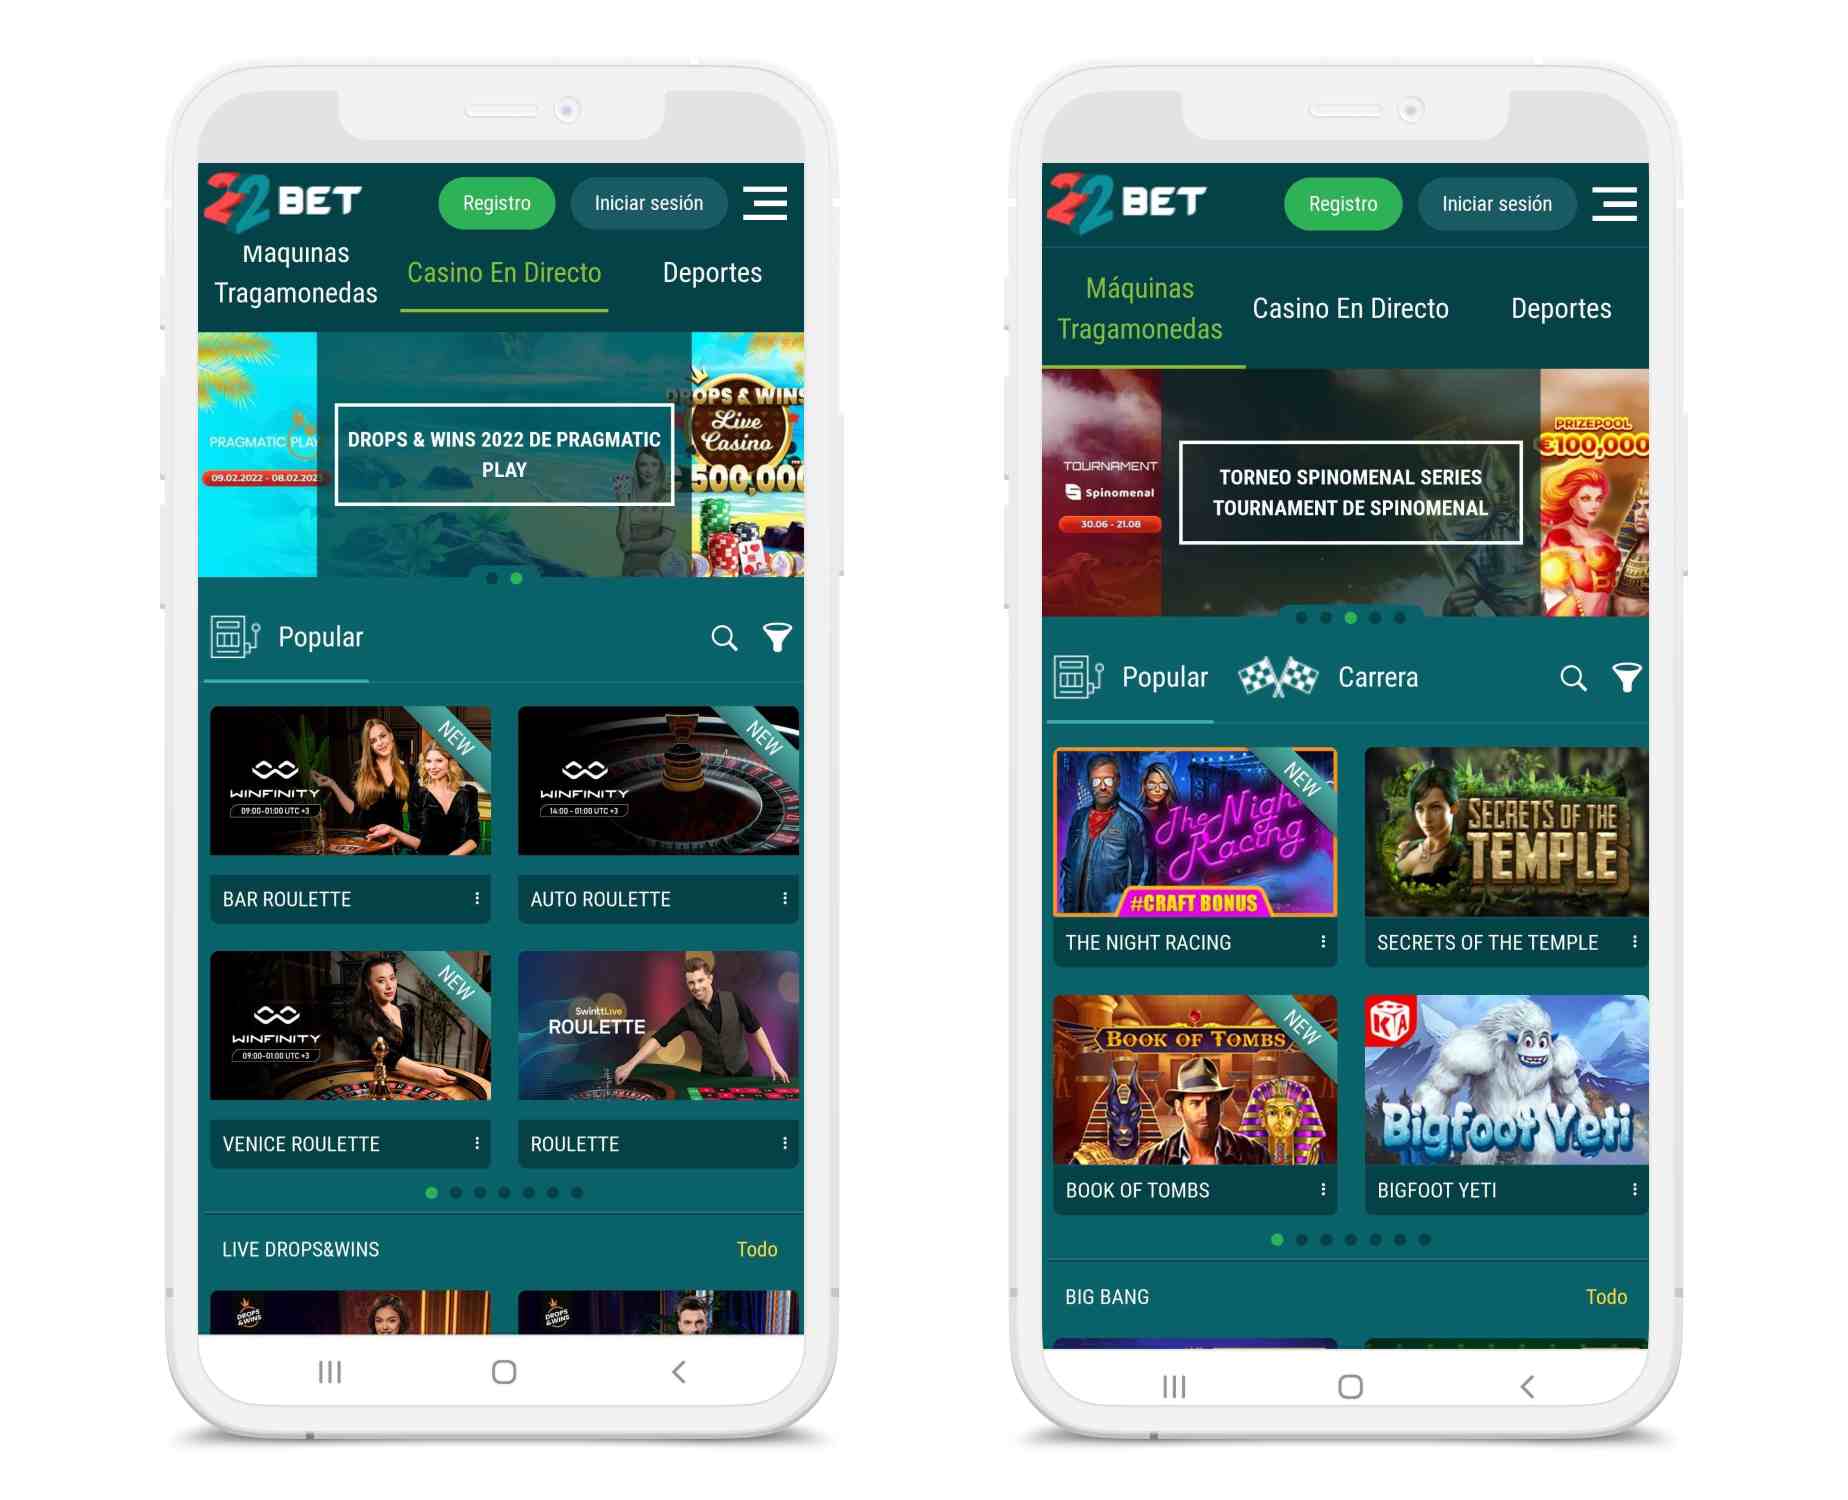 22Bet casino mobile app